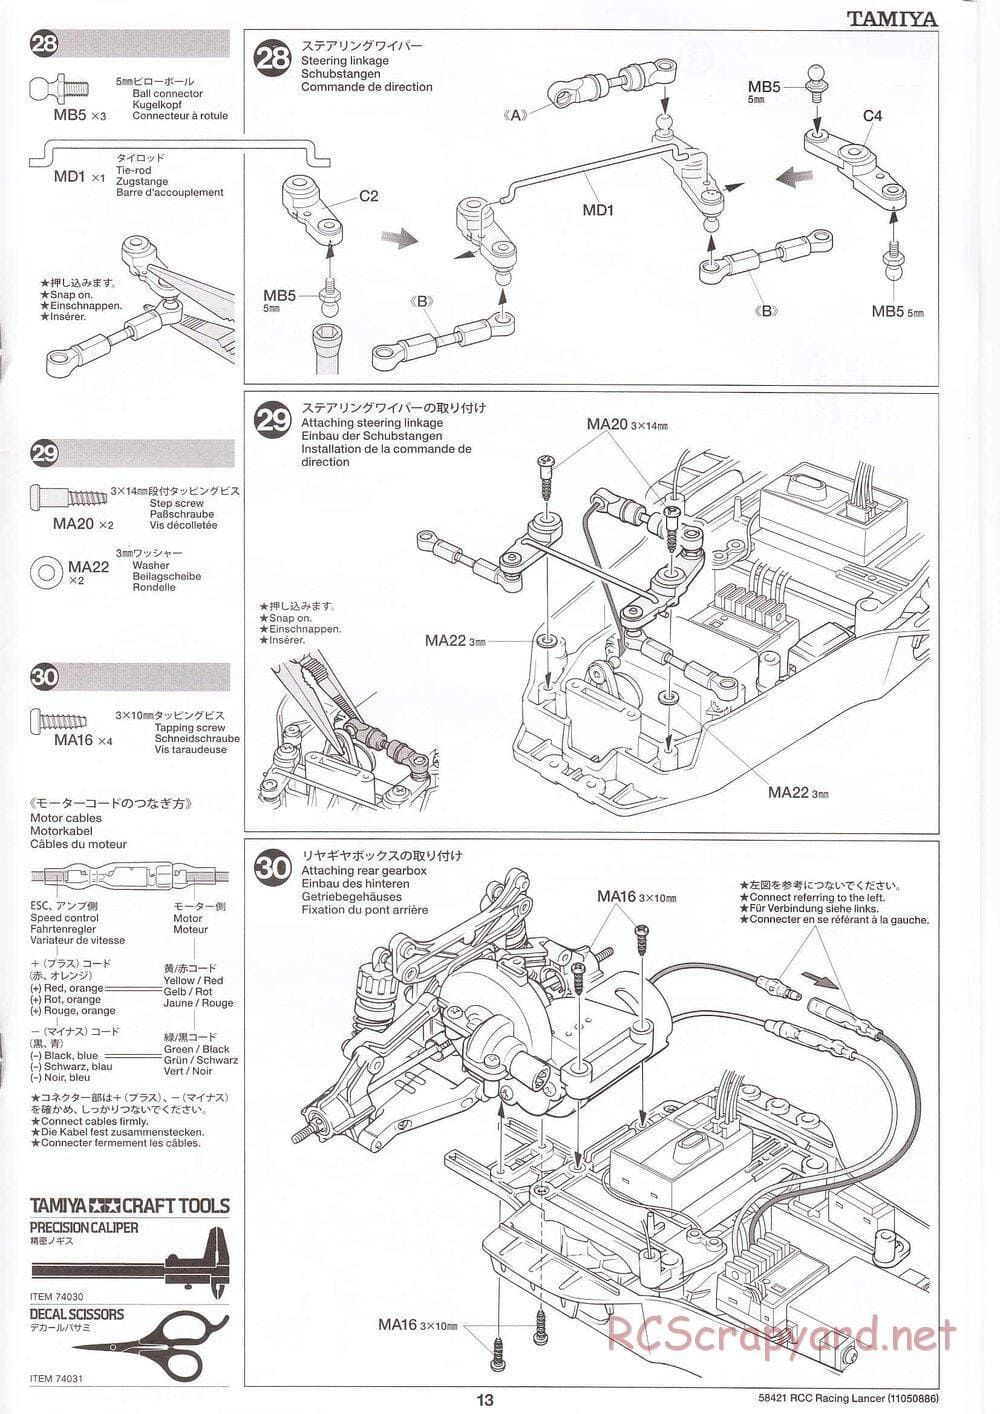 Tamiya - Mitsubishi Racing Lancer - DF-01 Chassis - Manual - Page 13